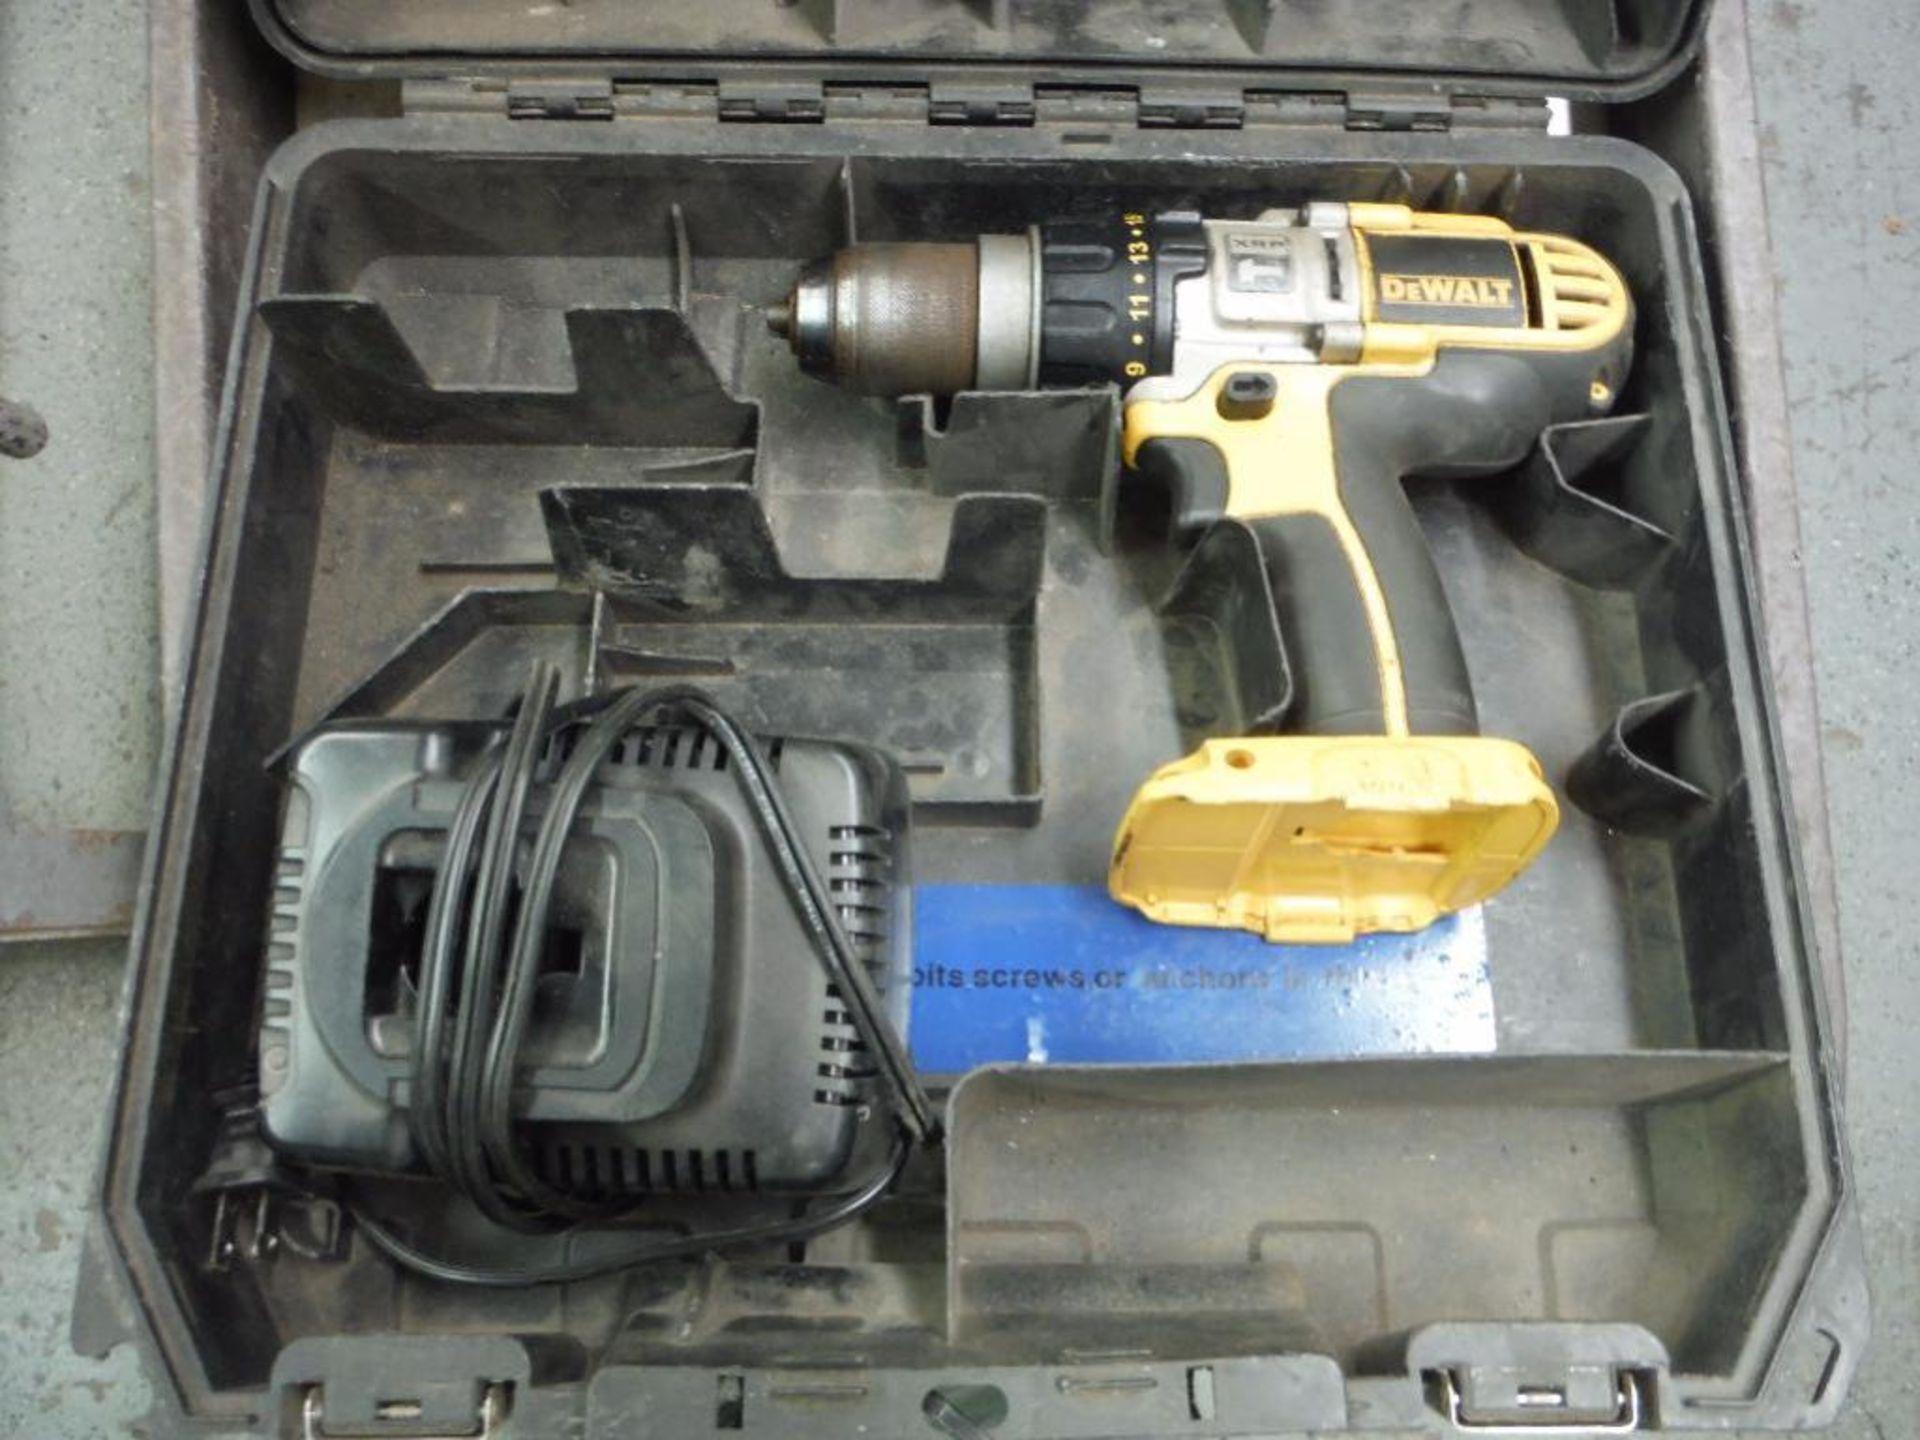 Dewalt 18 volt xrp cordless drill, battery charger, case ** Rigging Fee: $5 ** - Image 2 of 3